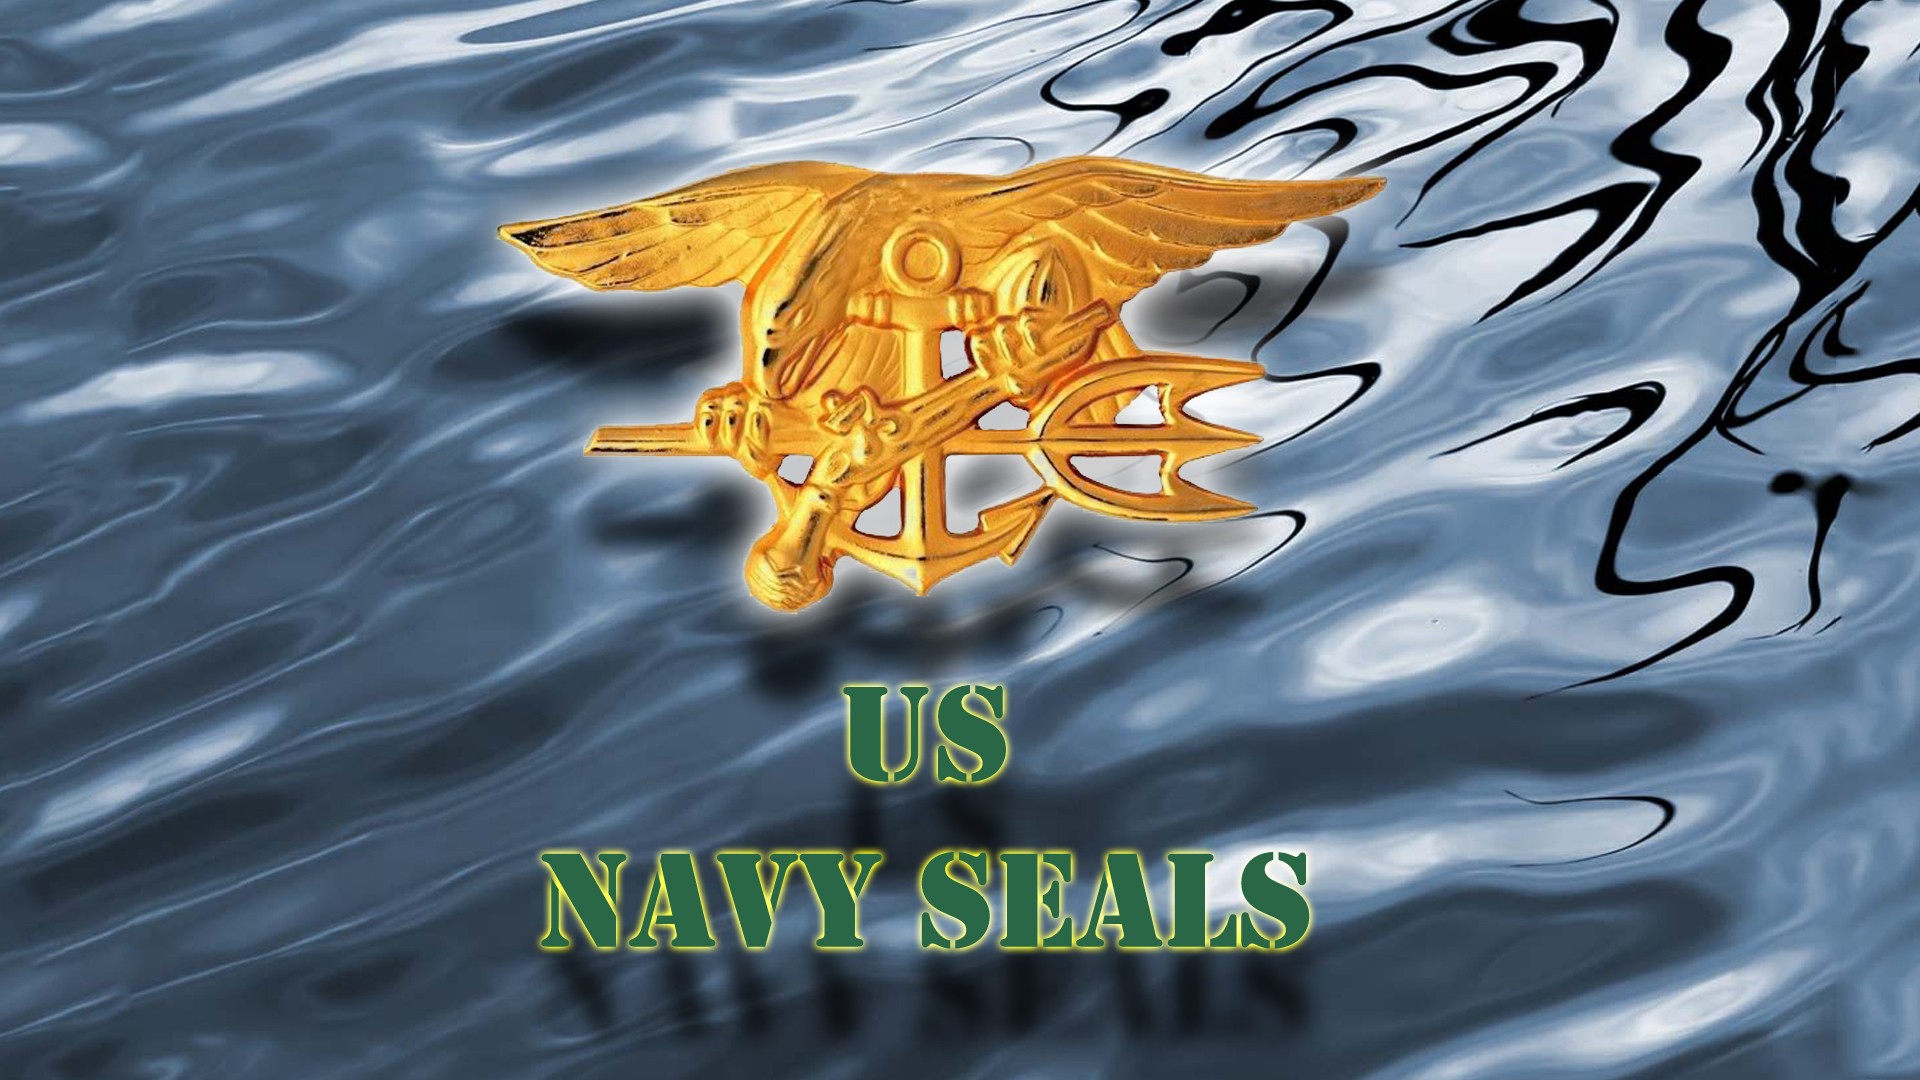 Navy Seal Trident Wallpaper Hd Us navy seal t